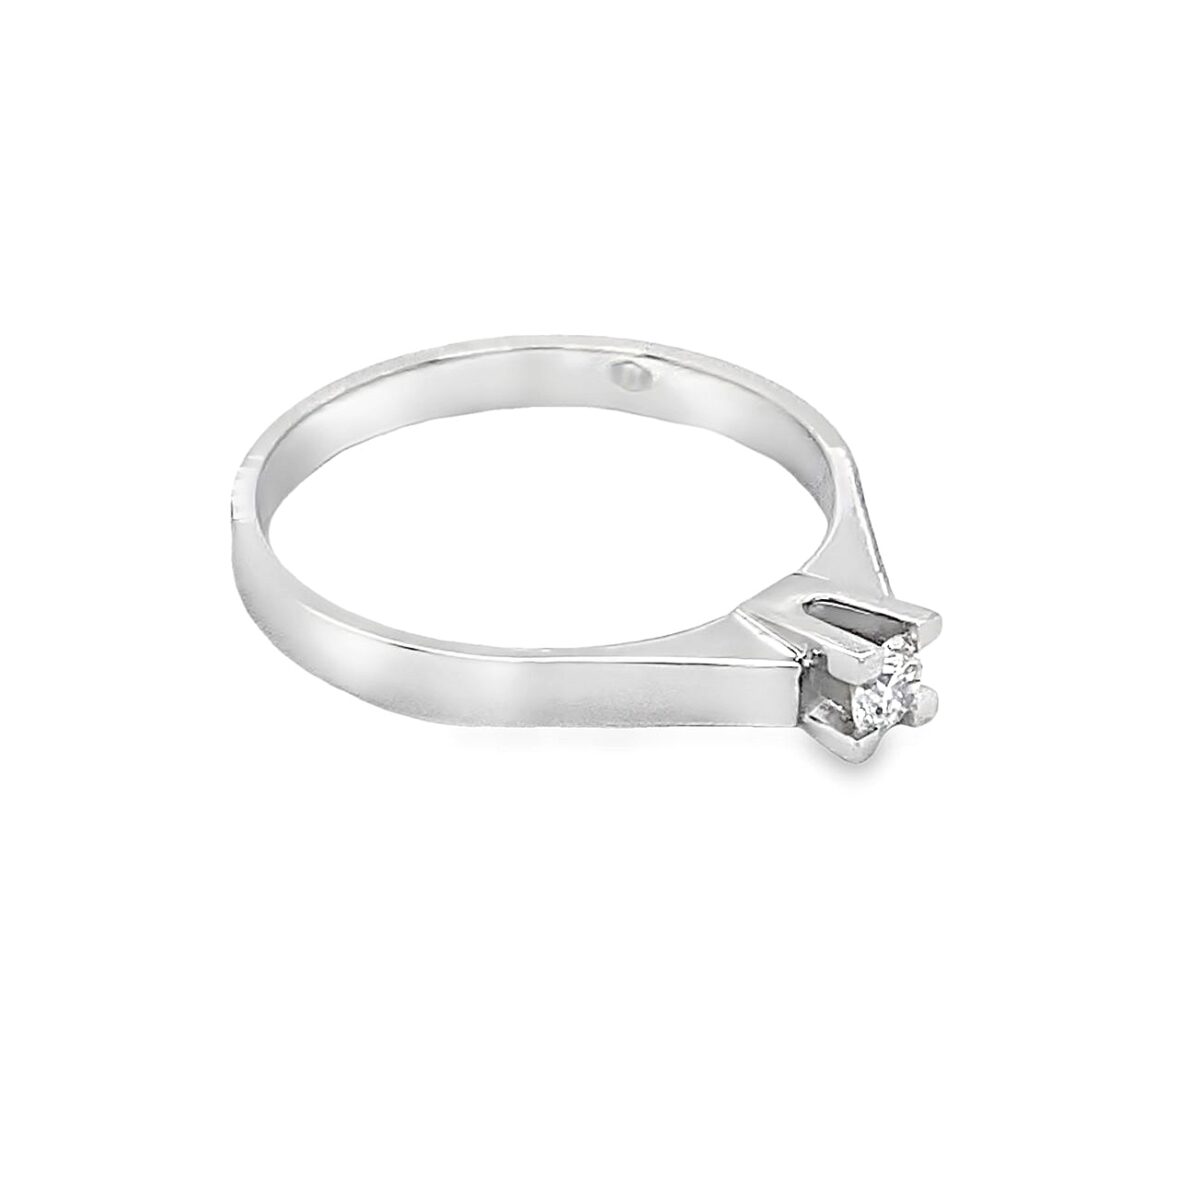 Jewellers - Μονόπετρο δακτυλίδι με μπριγιάν